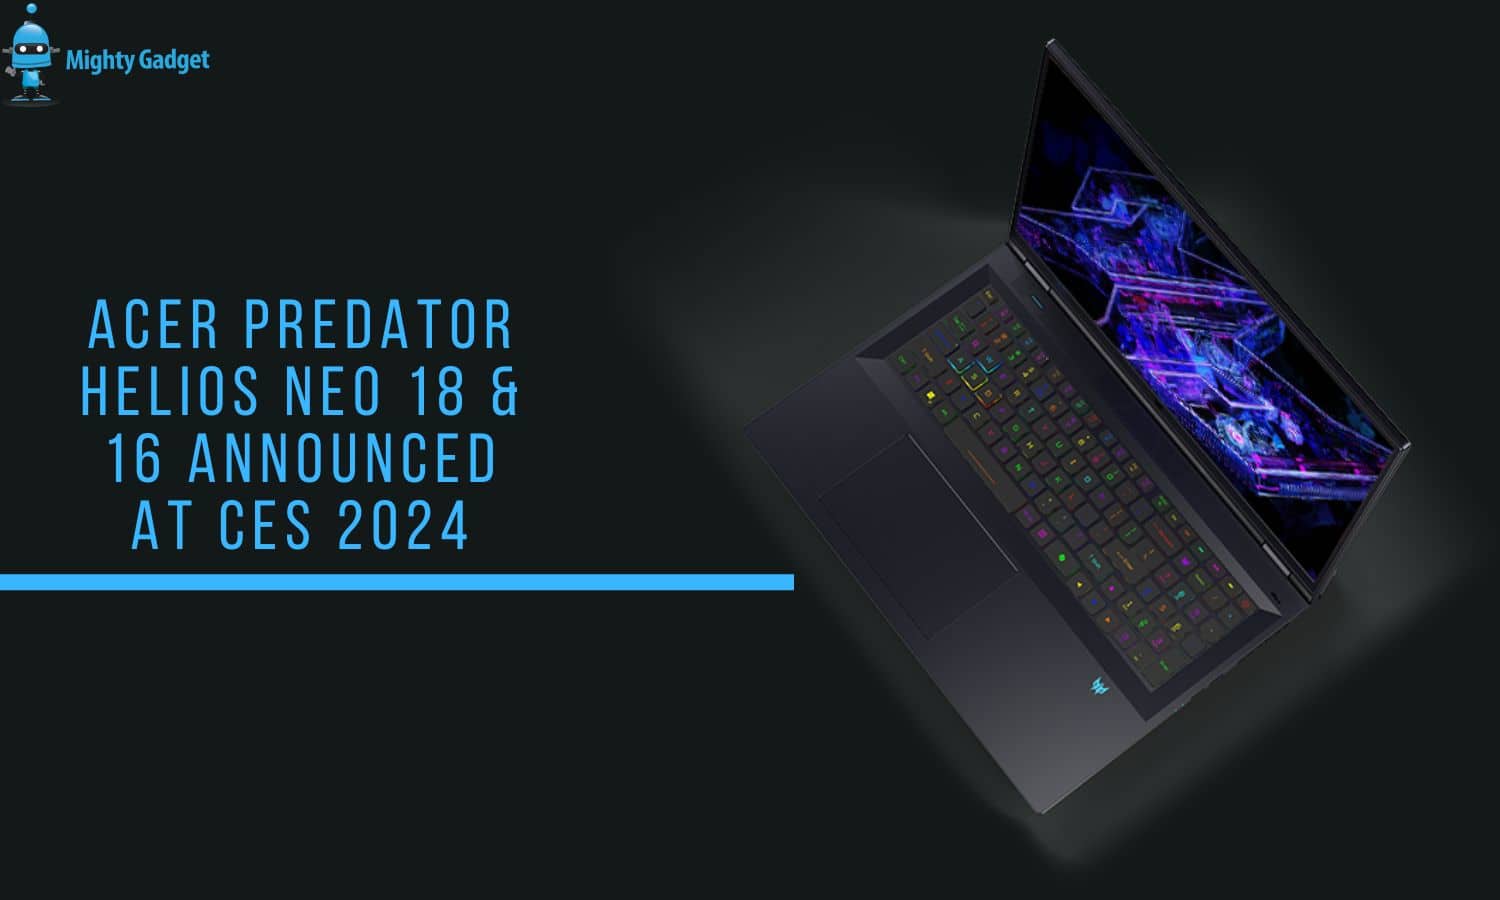 Acer Predator Helios Neo 18 16 Announced at CES 2024